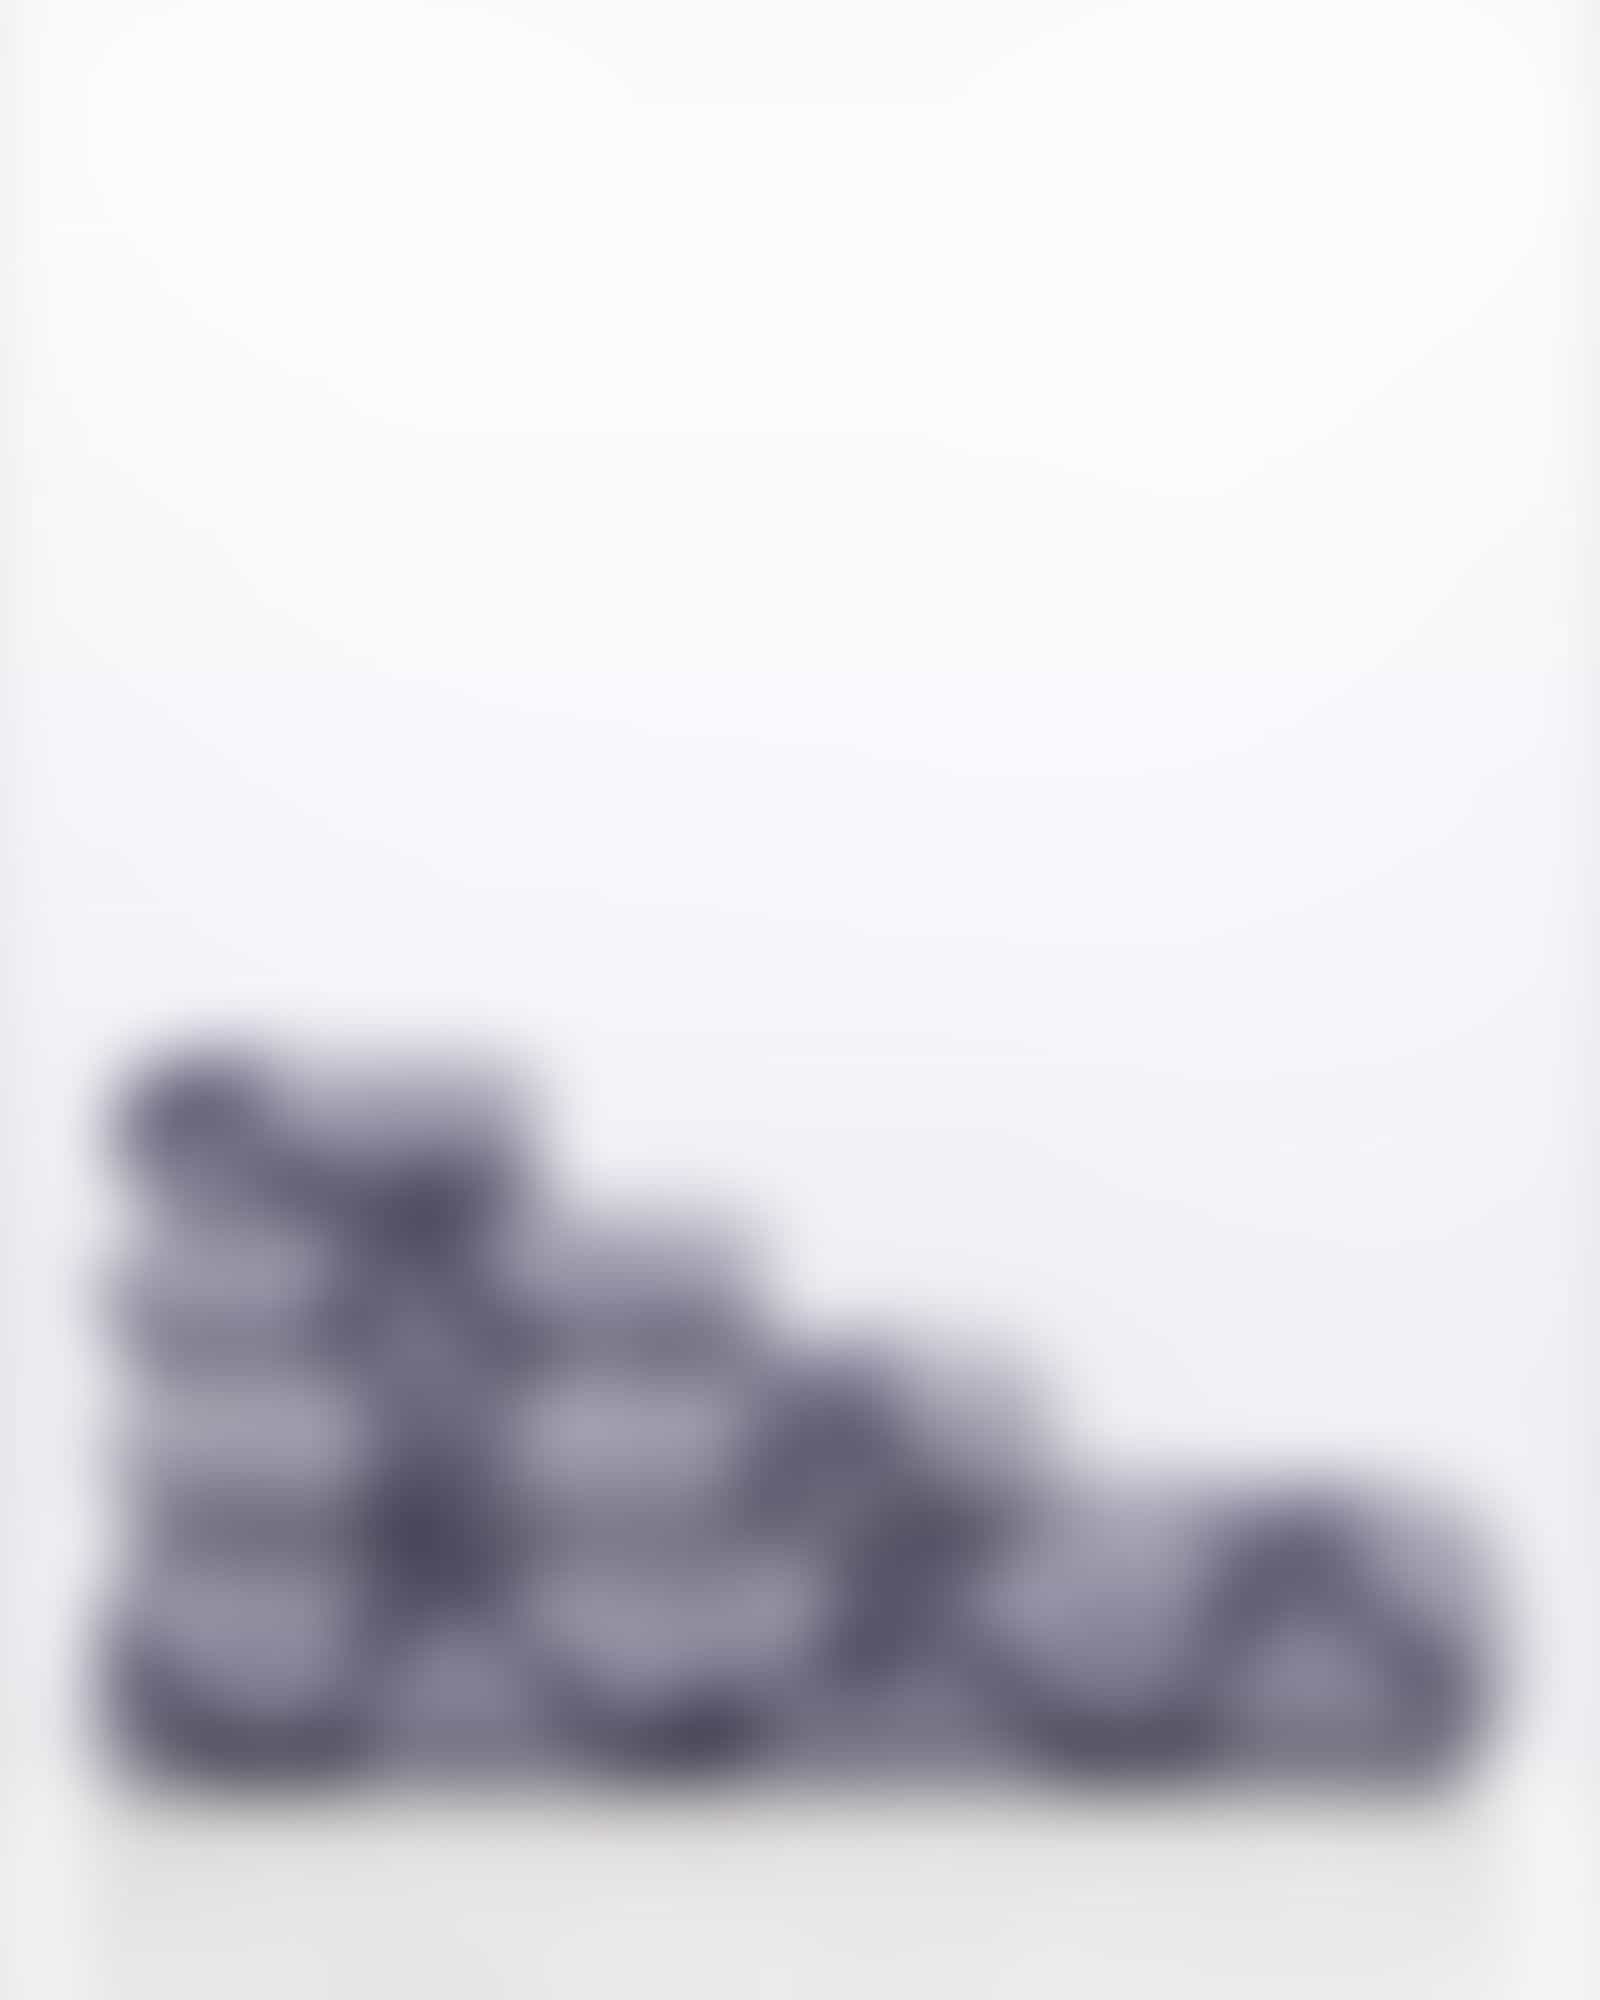 JOOP! Handtücher Classic Cornflower 1611 - Farbe: denim - 19 - Waschhandschuh 16x22 cm